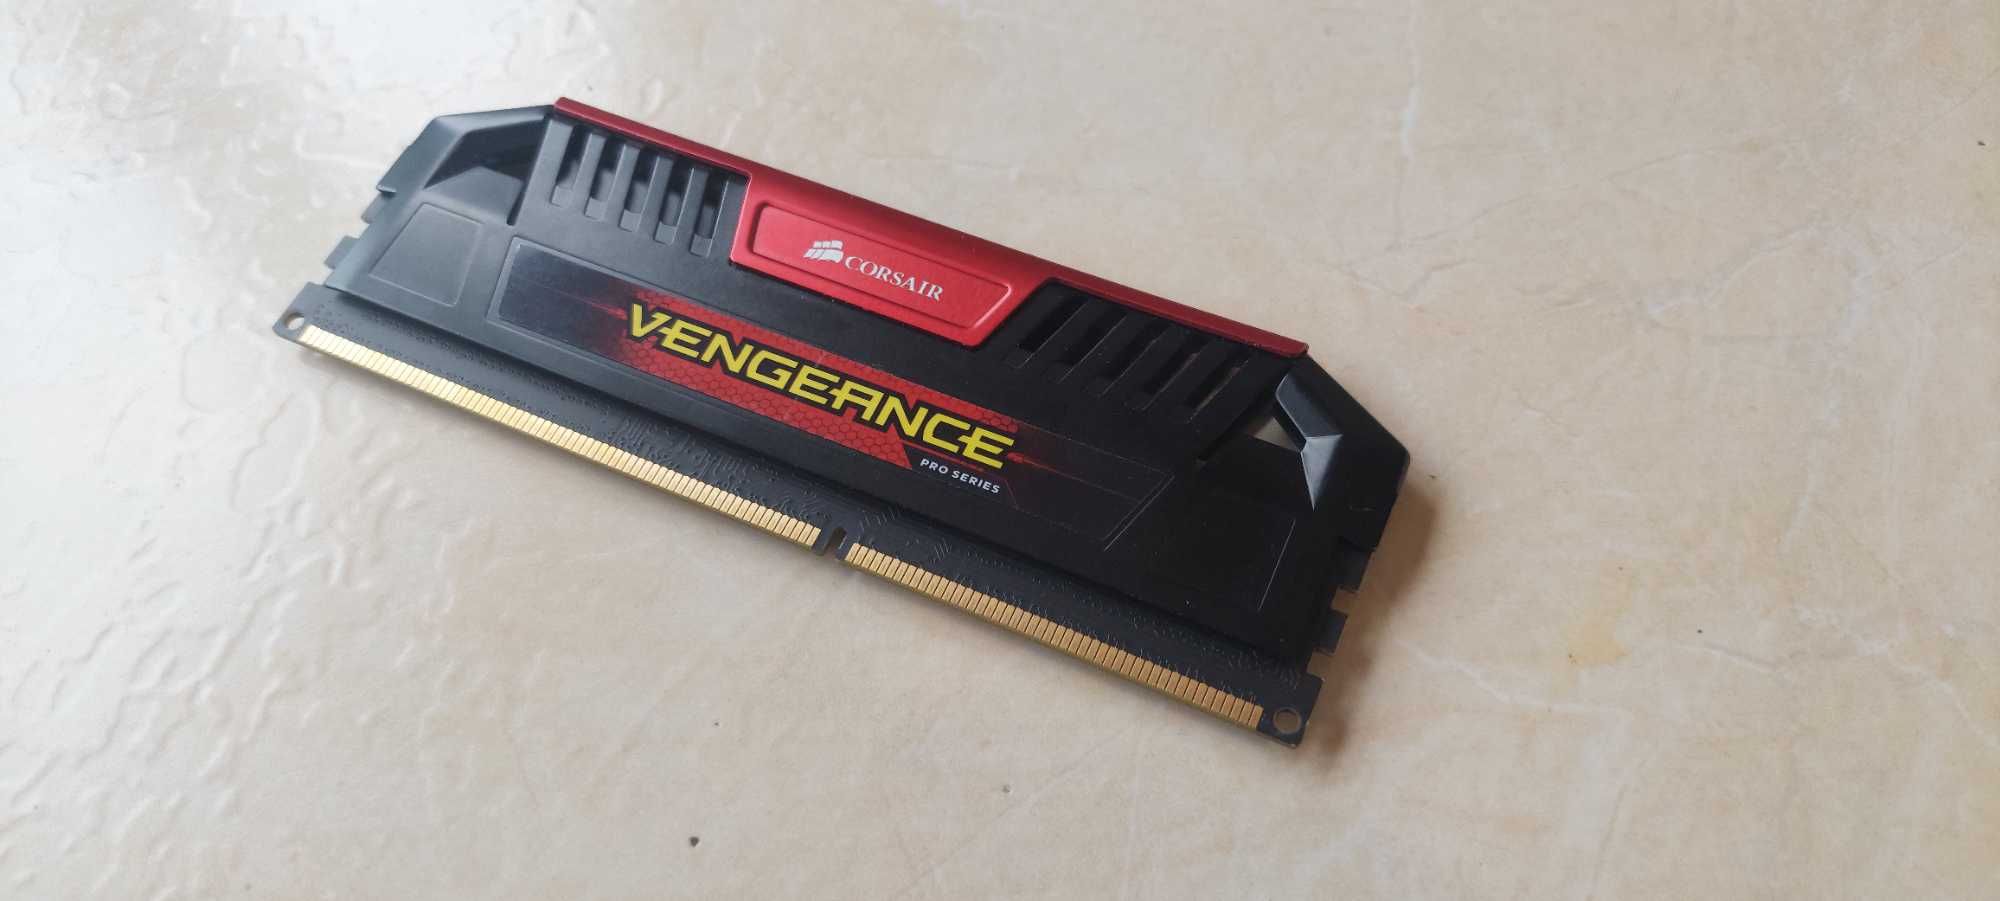 Corsair Vengeance Pro Series 4GB DDR 3 1866mhz